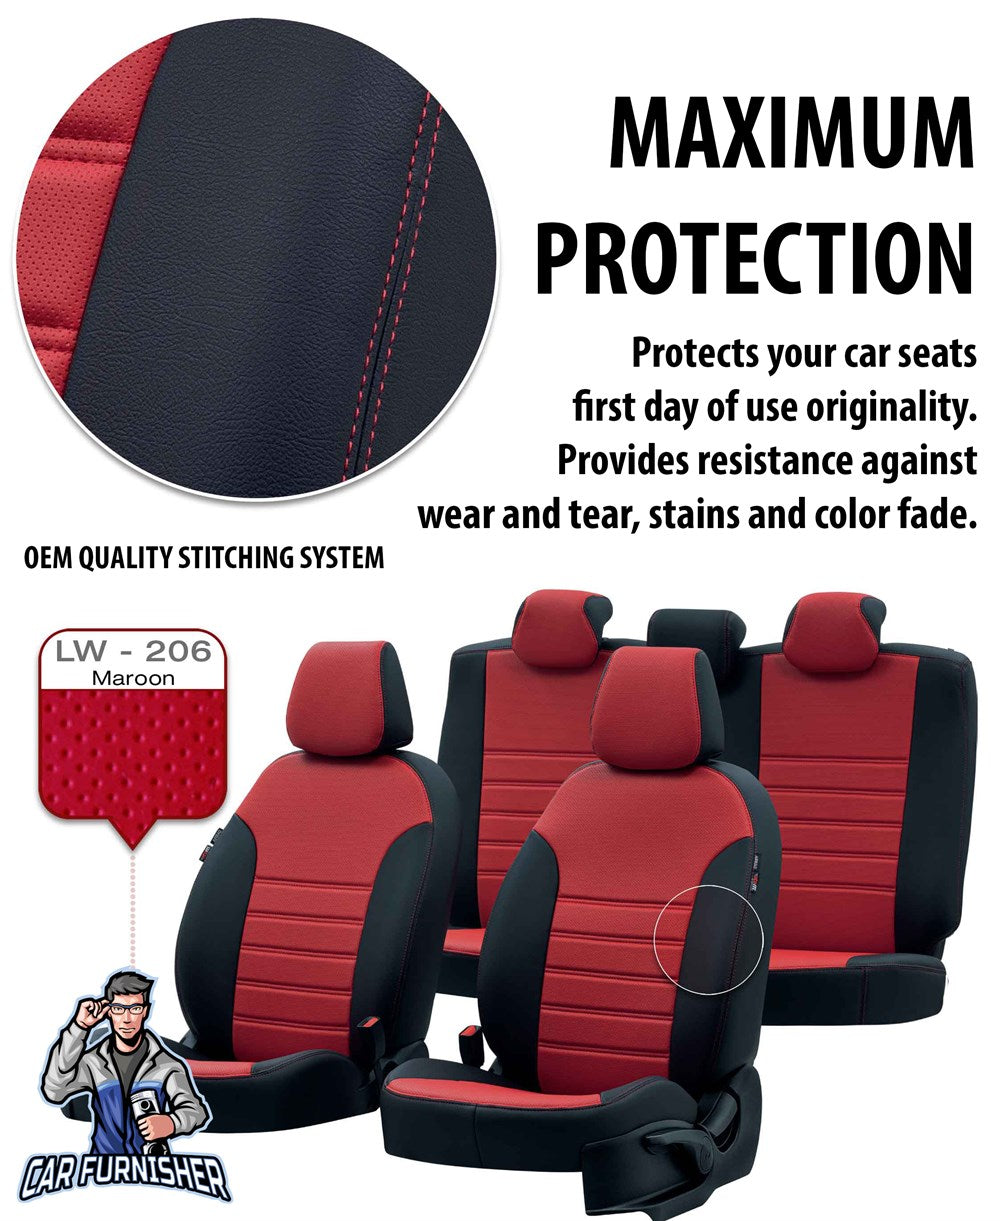 Kia Opirus Seat Covers Istanbul Leather Design Burgundy Leather